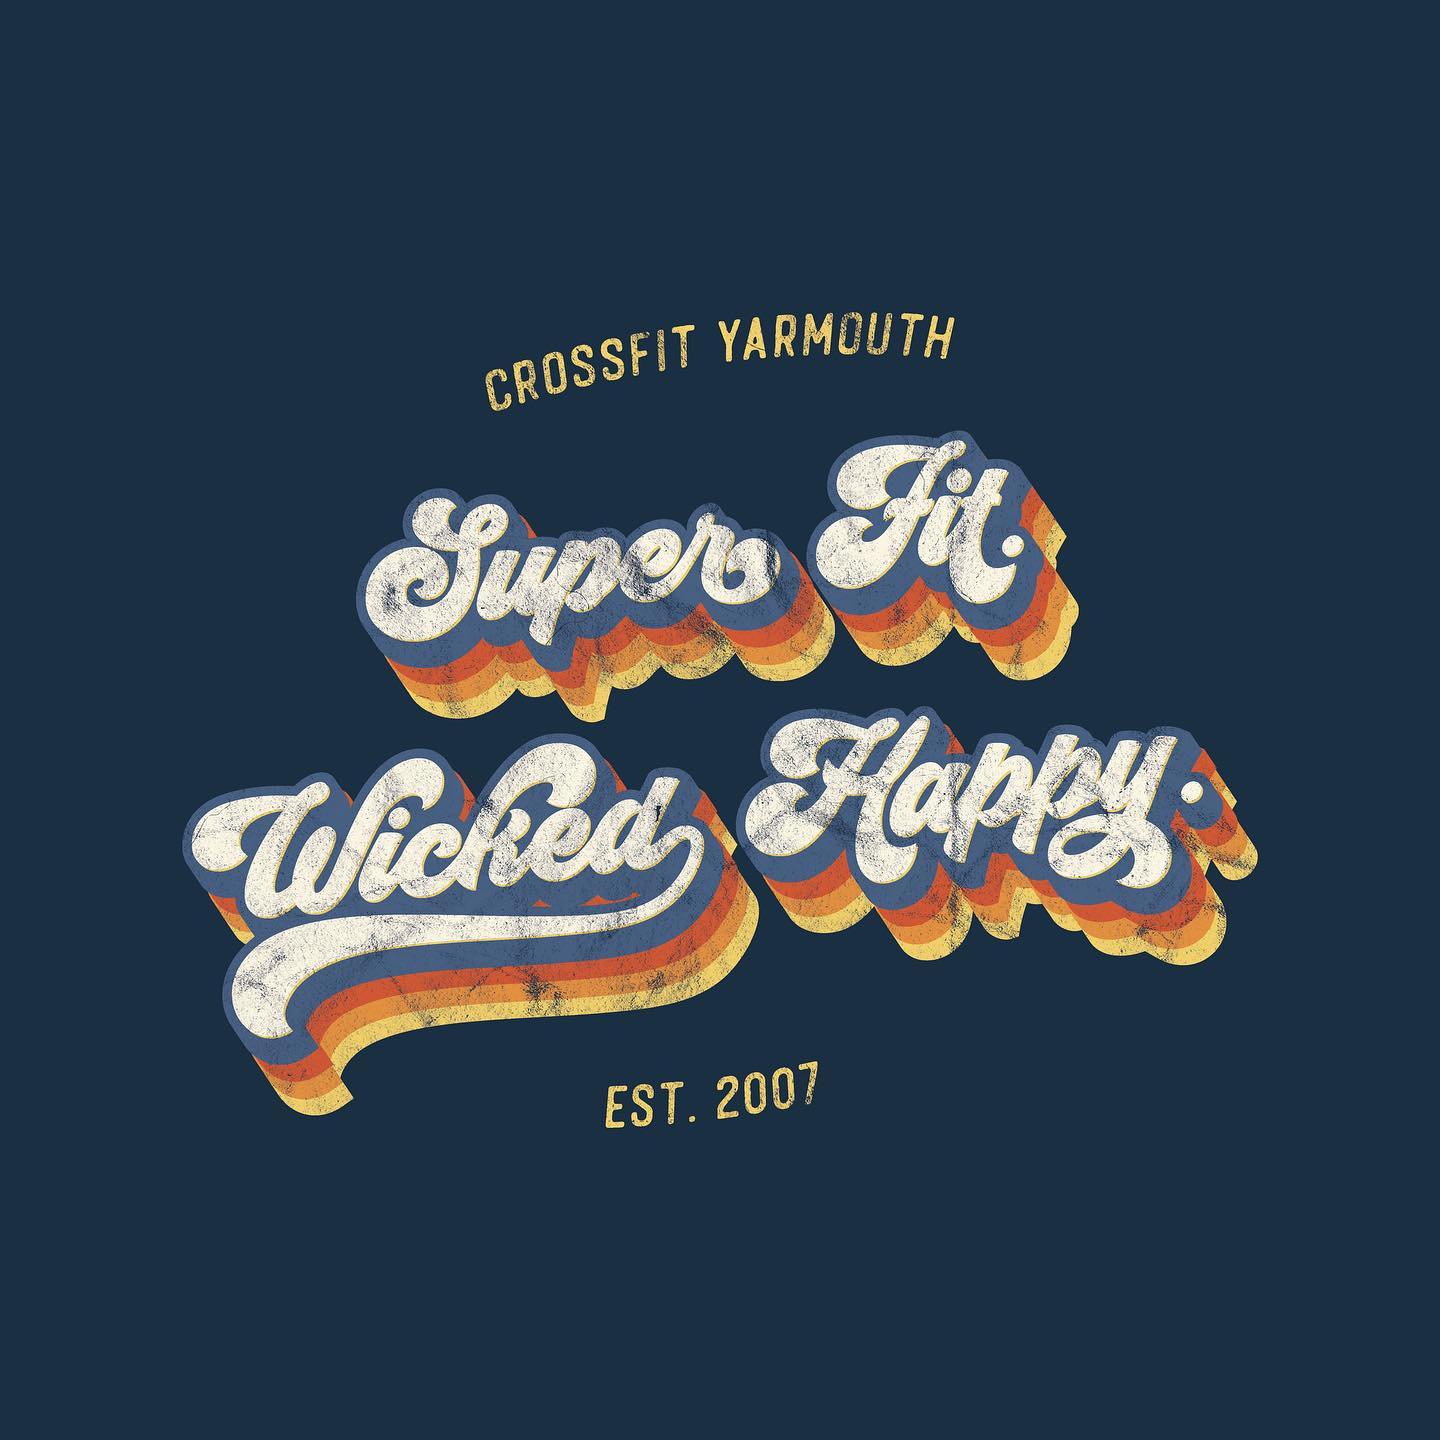 CrossFit Yarmouth